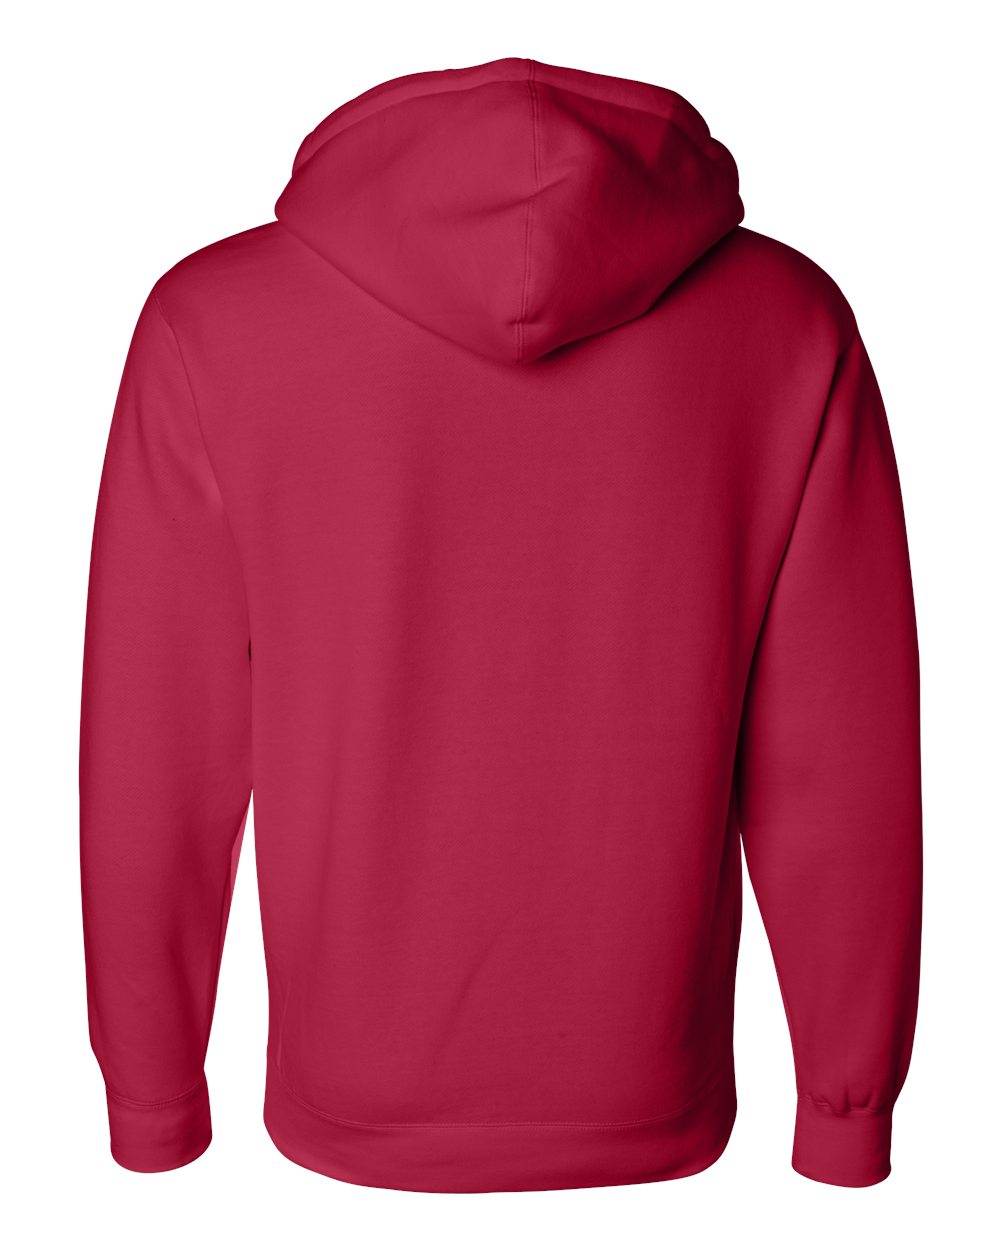 Independent Heavyweight Hooded Sweatshirt - IND4000